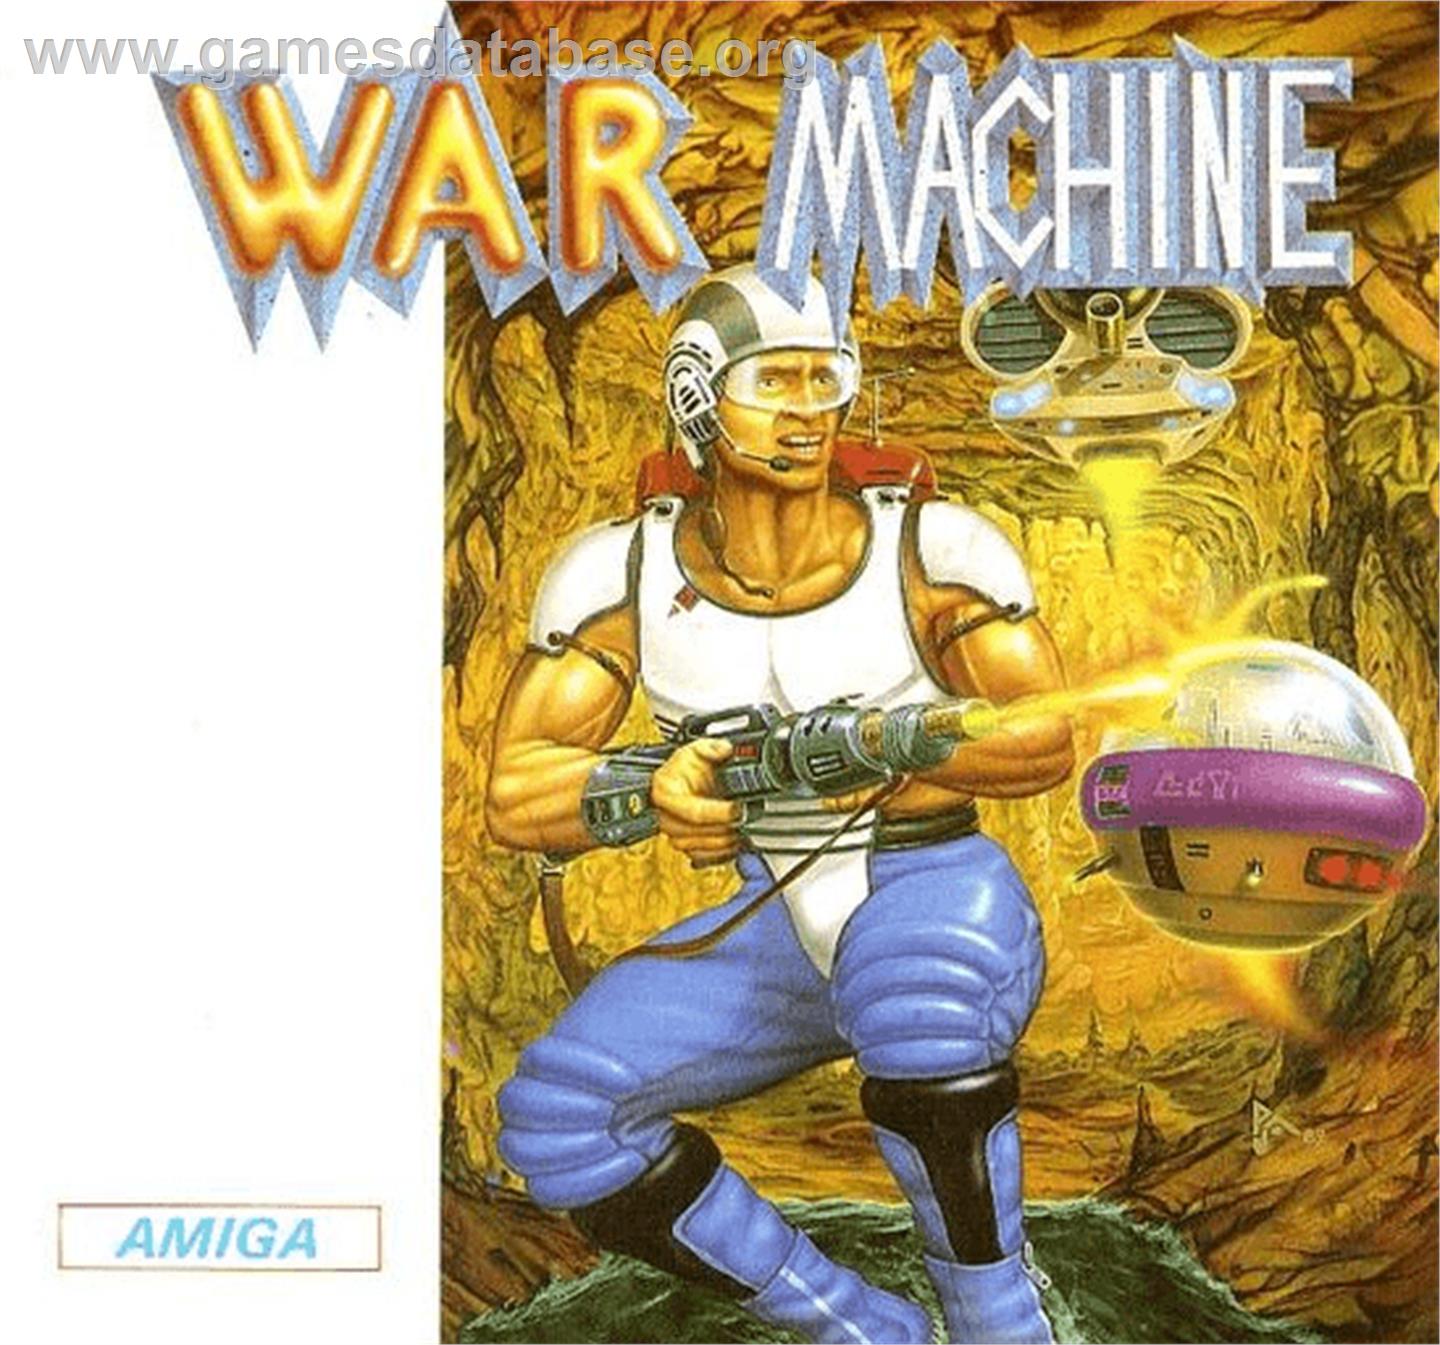 War Machine - Commodore Amiga - Artwork - Box